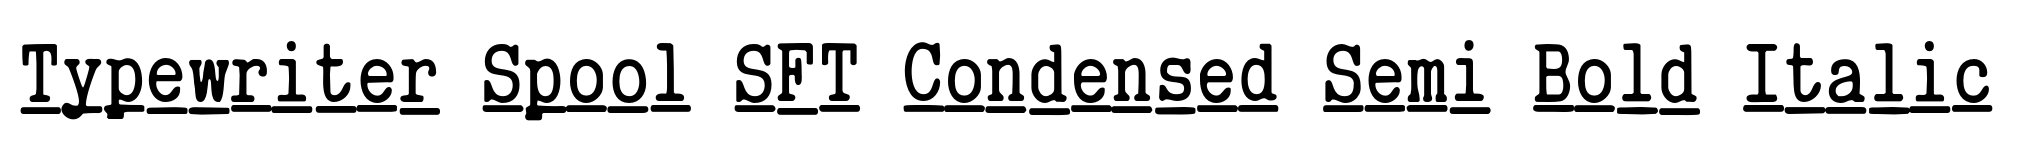 Typewriter Spool SFT Condensed Semi Bold Italic image